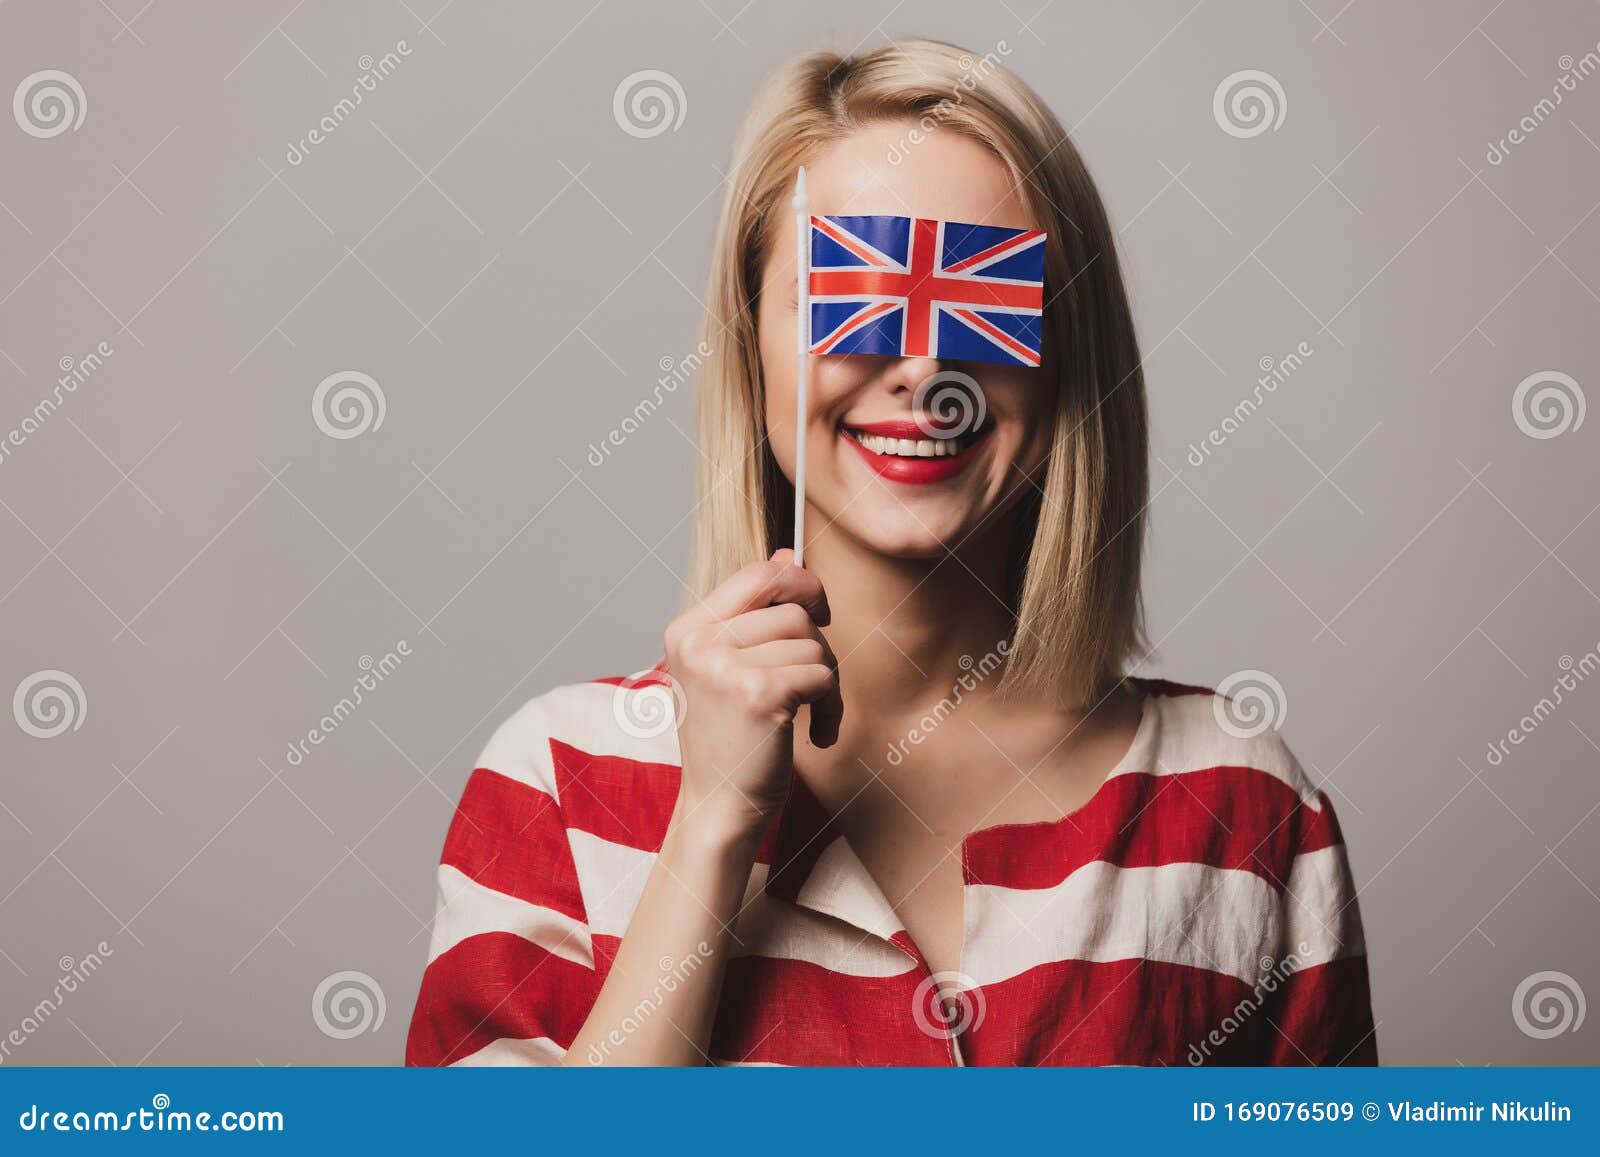 Девушка на фоне английского флага